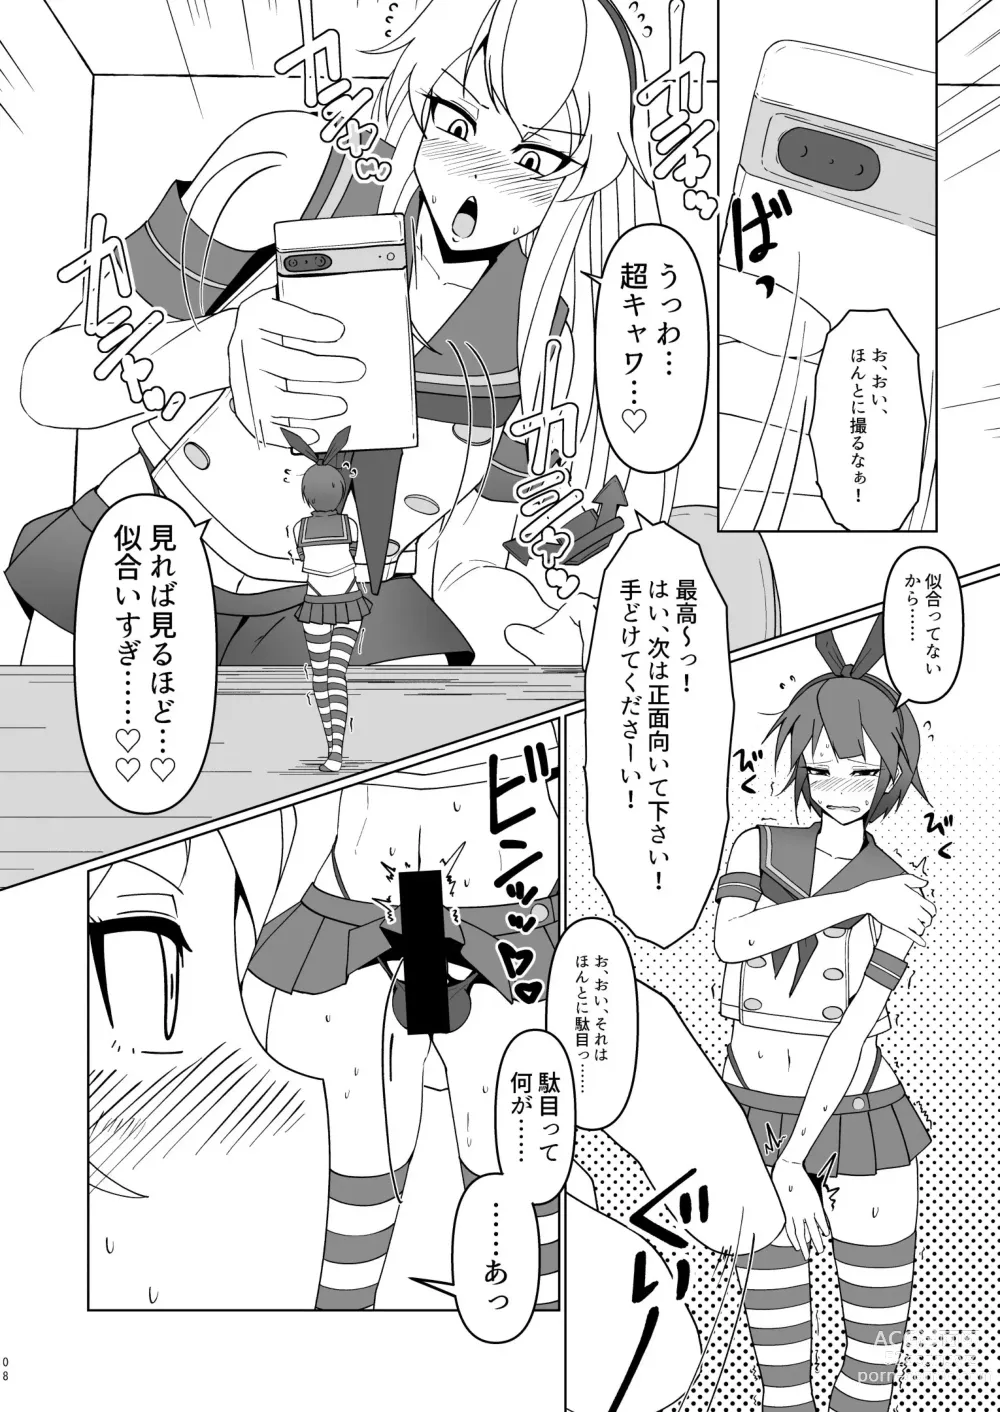 Page 8 of doujinshi Shimakaze Saturation